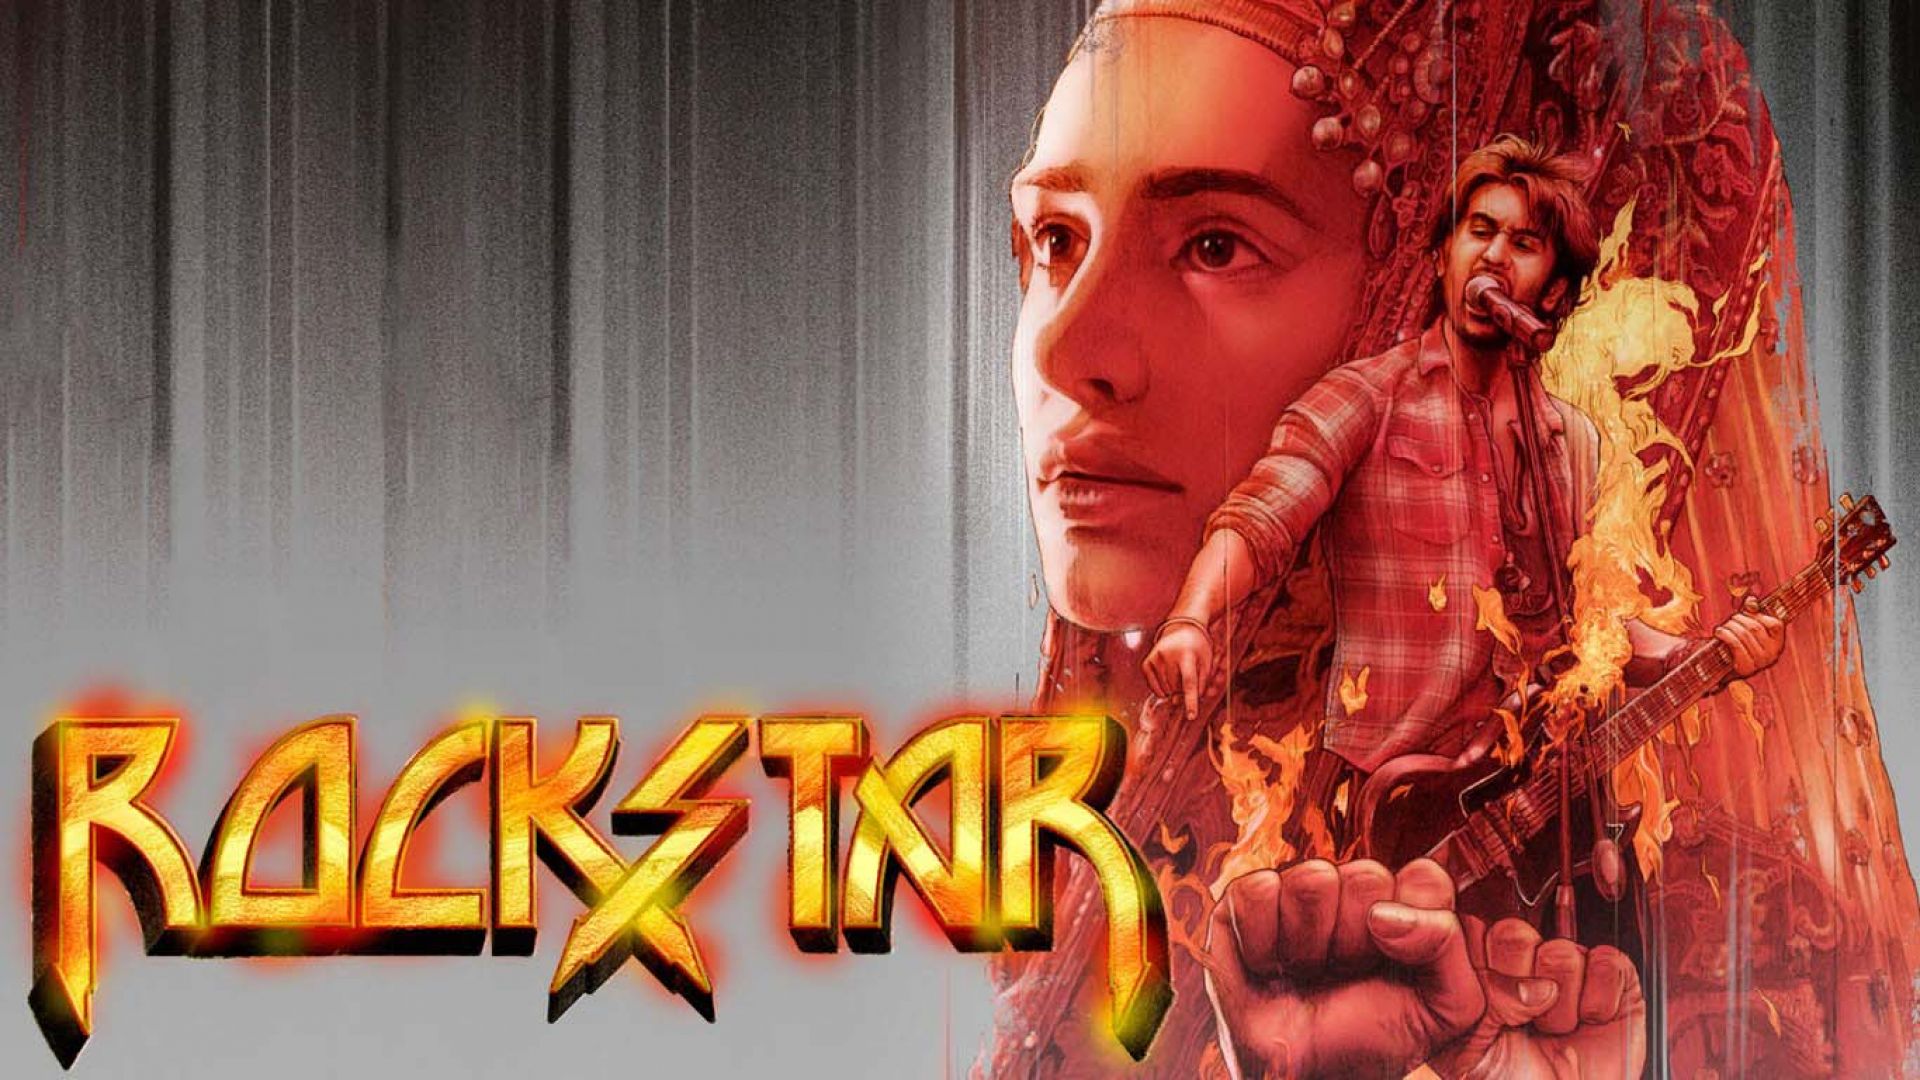 Rock Star Movie Poster - Rockstar Movie Poster Hd , HD Wallpaper & Backgrounds